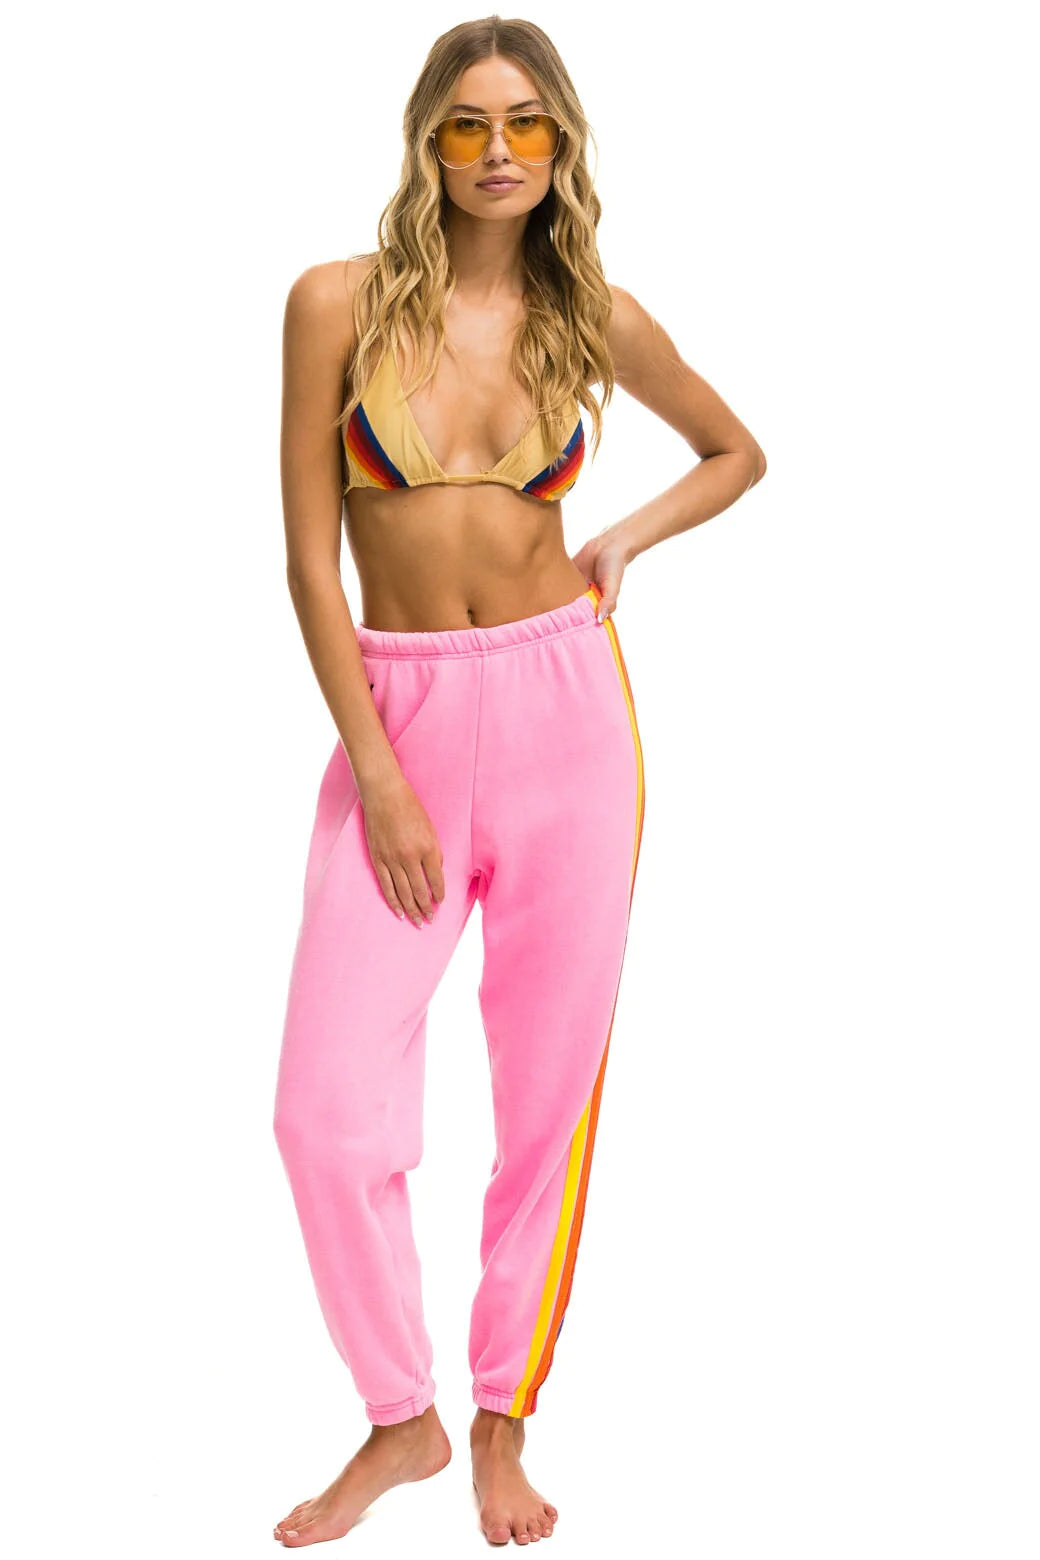 Aviator Nation - 5 Stripe Women's Sweatpants - Neon Pink/Yellow